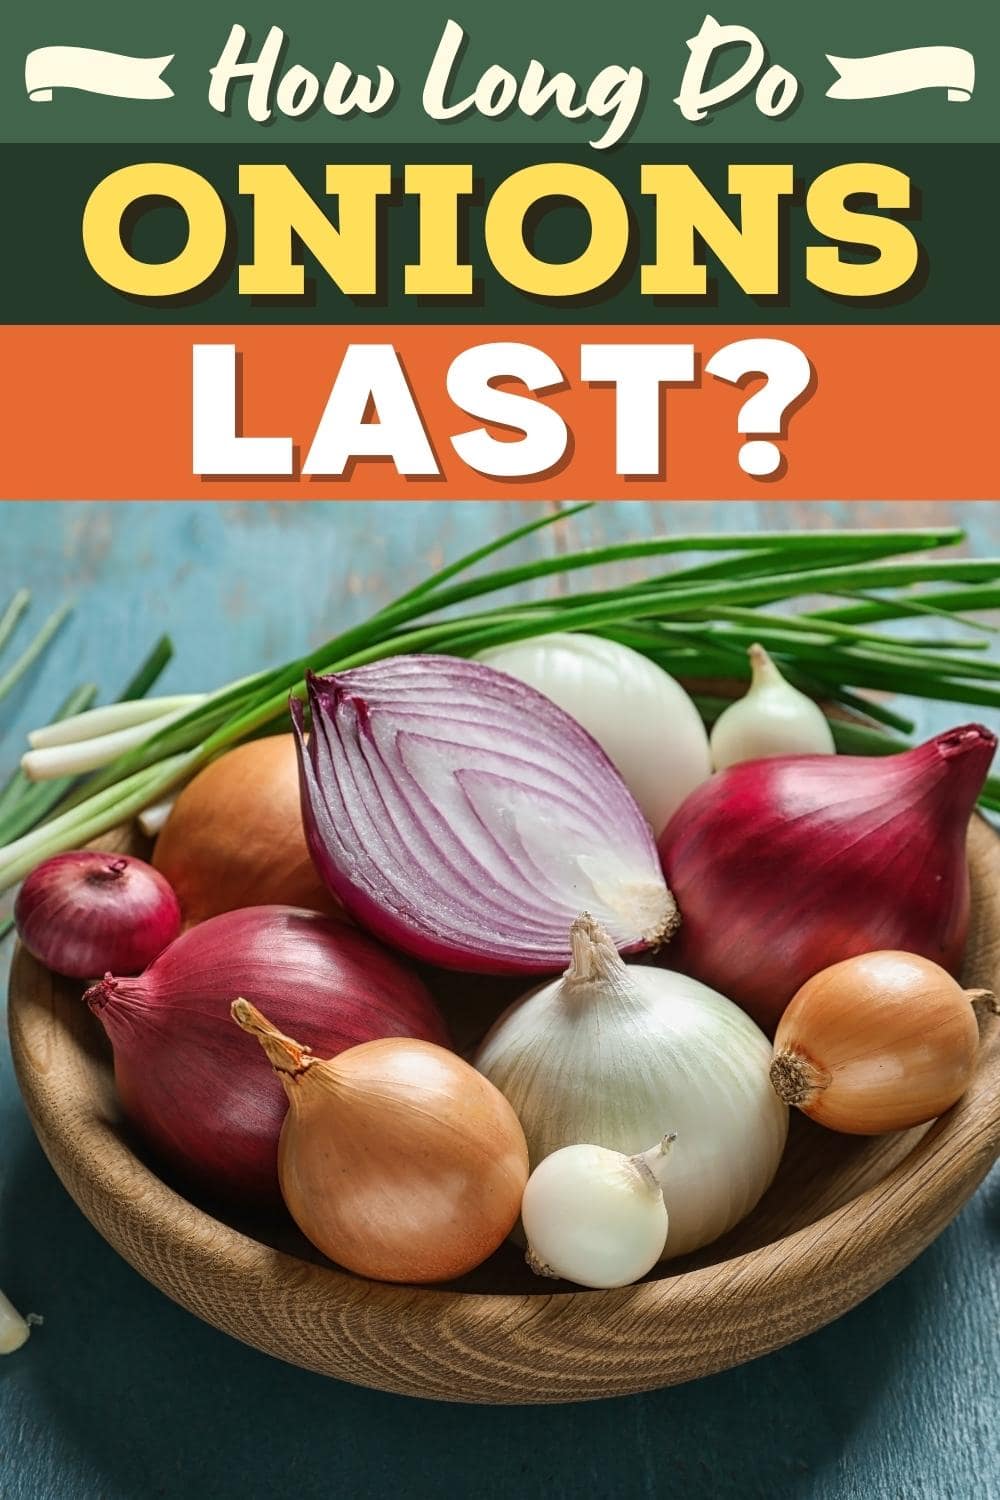 How Long Do Onions Last?